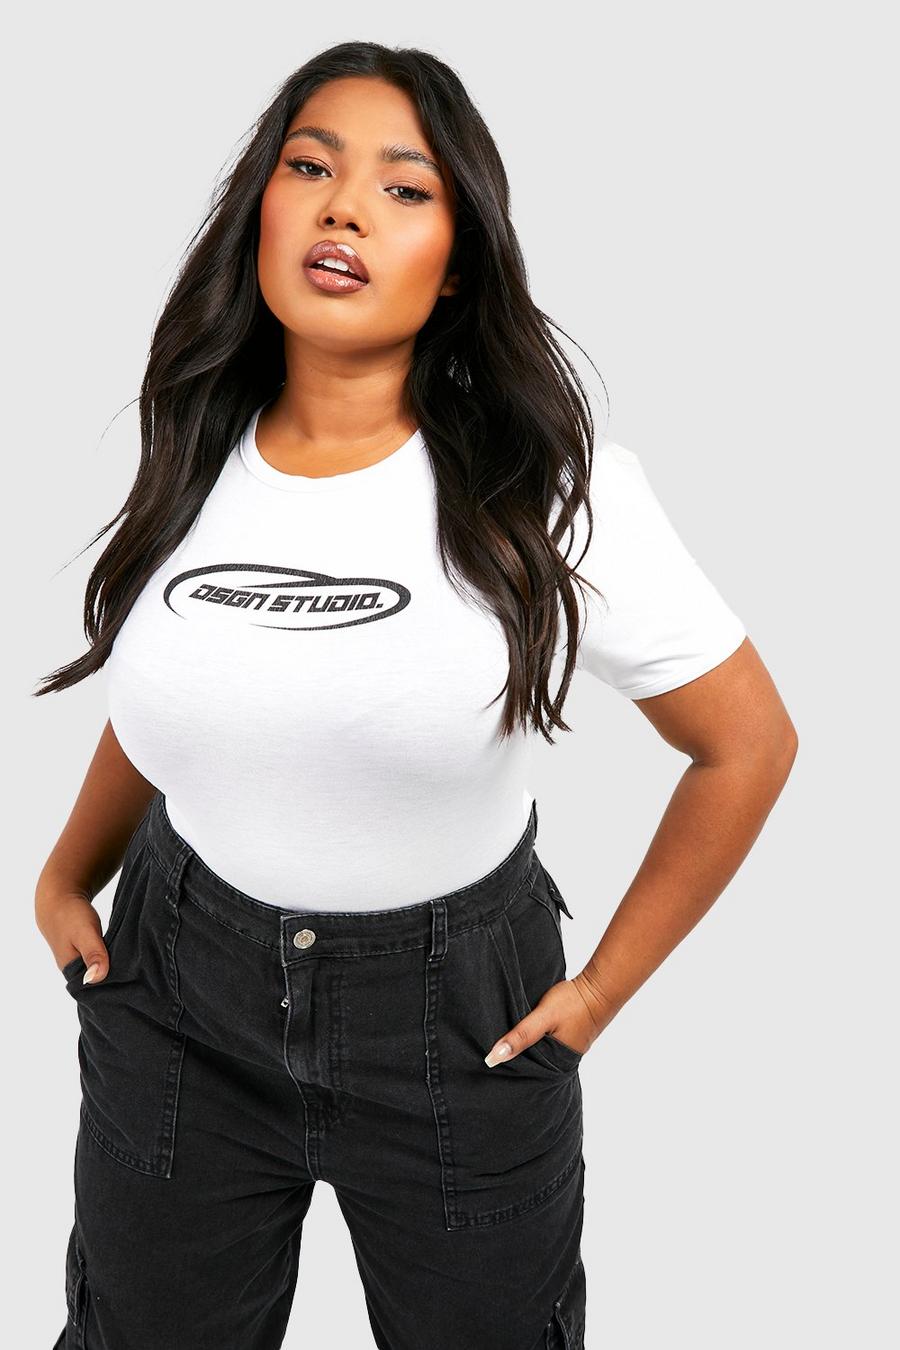 T-shirt Plus Size sagomata con logo Dsgn Studio